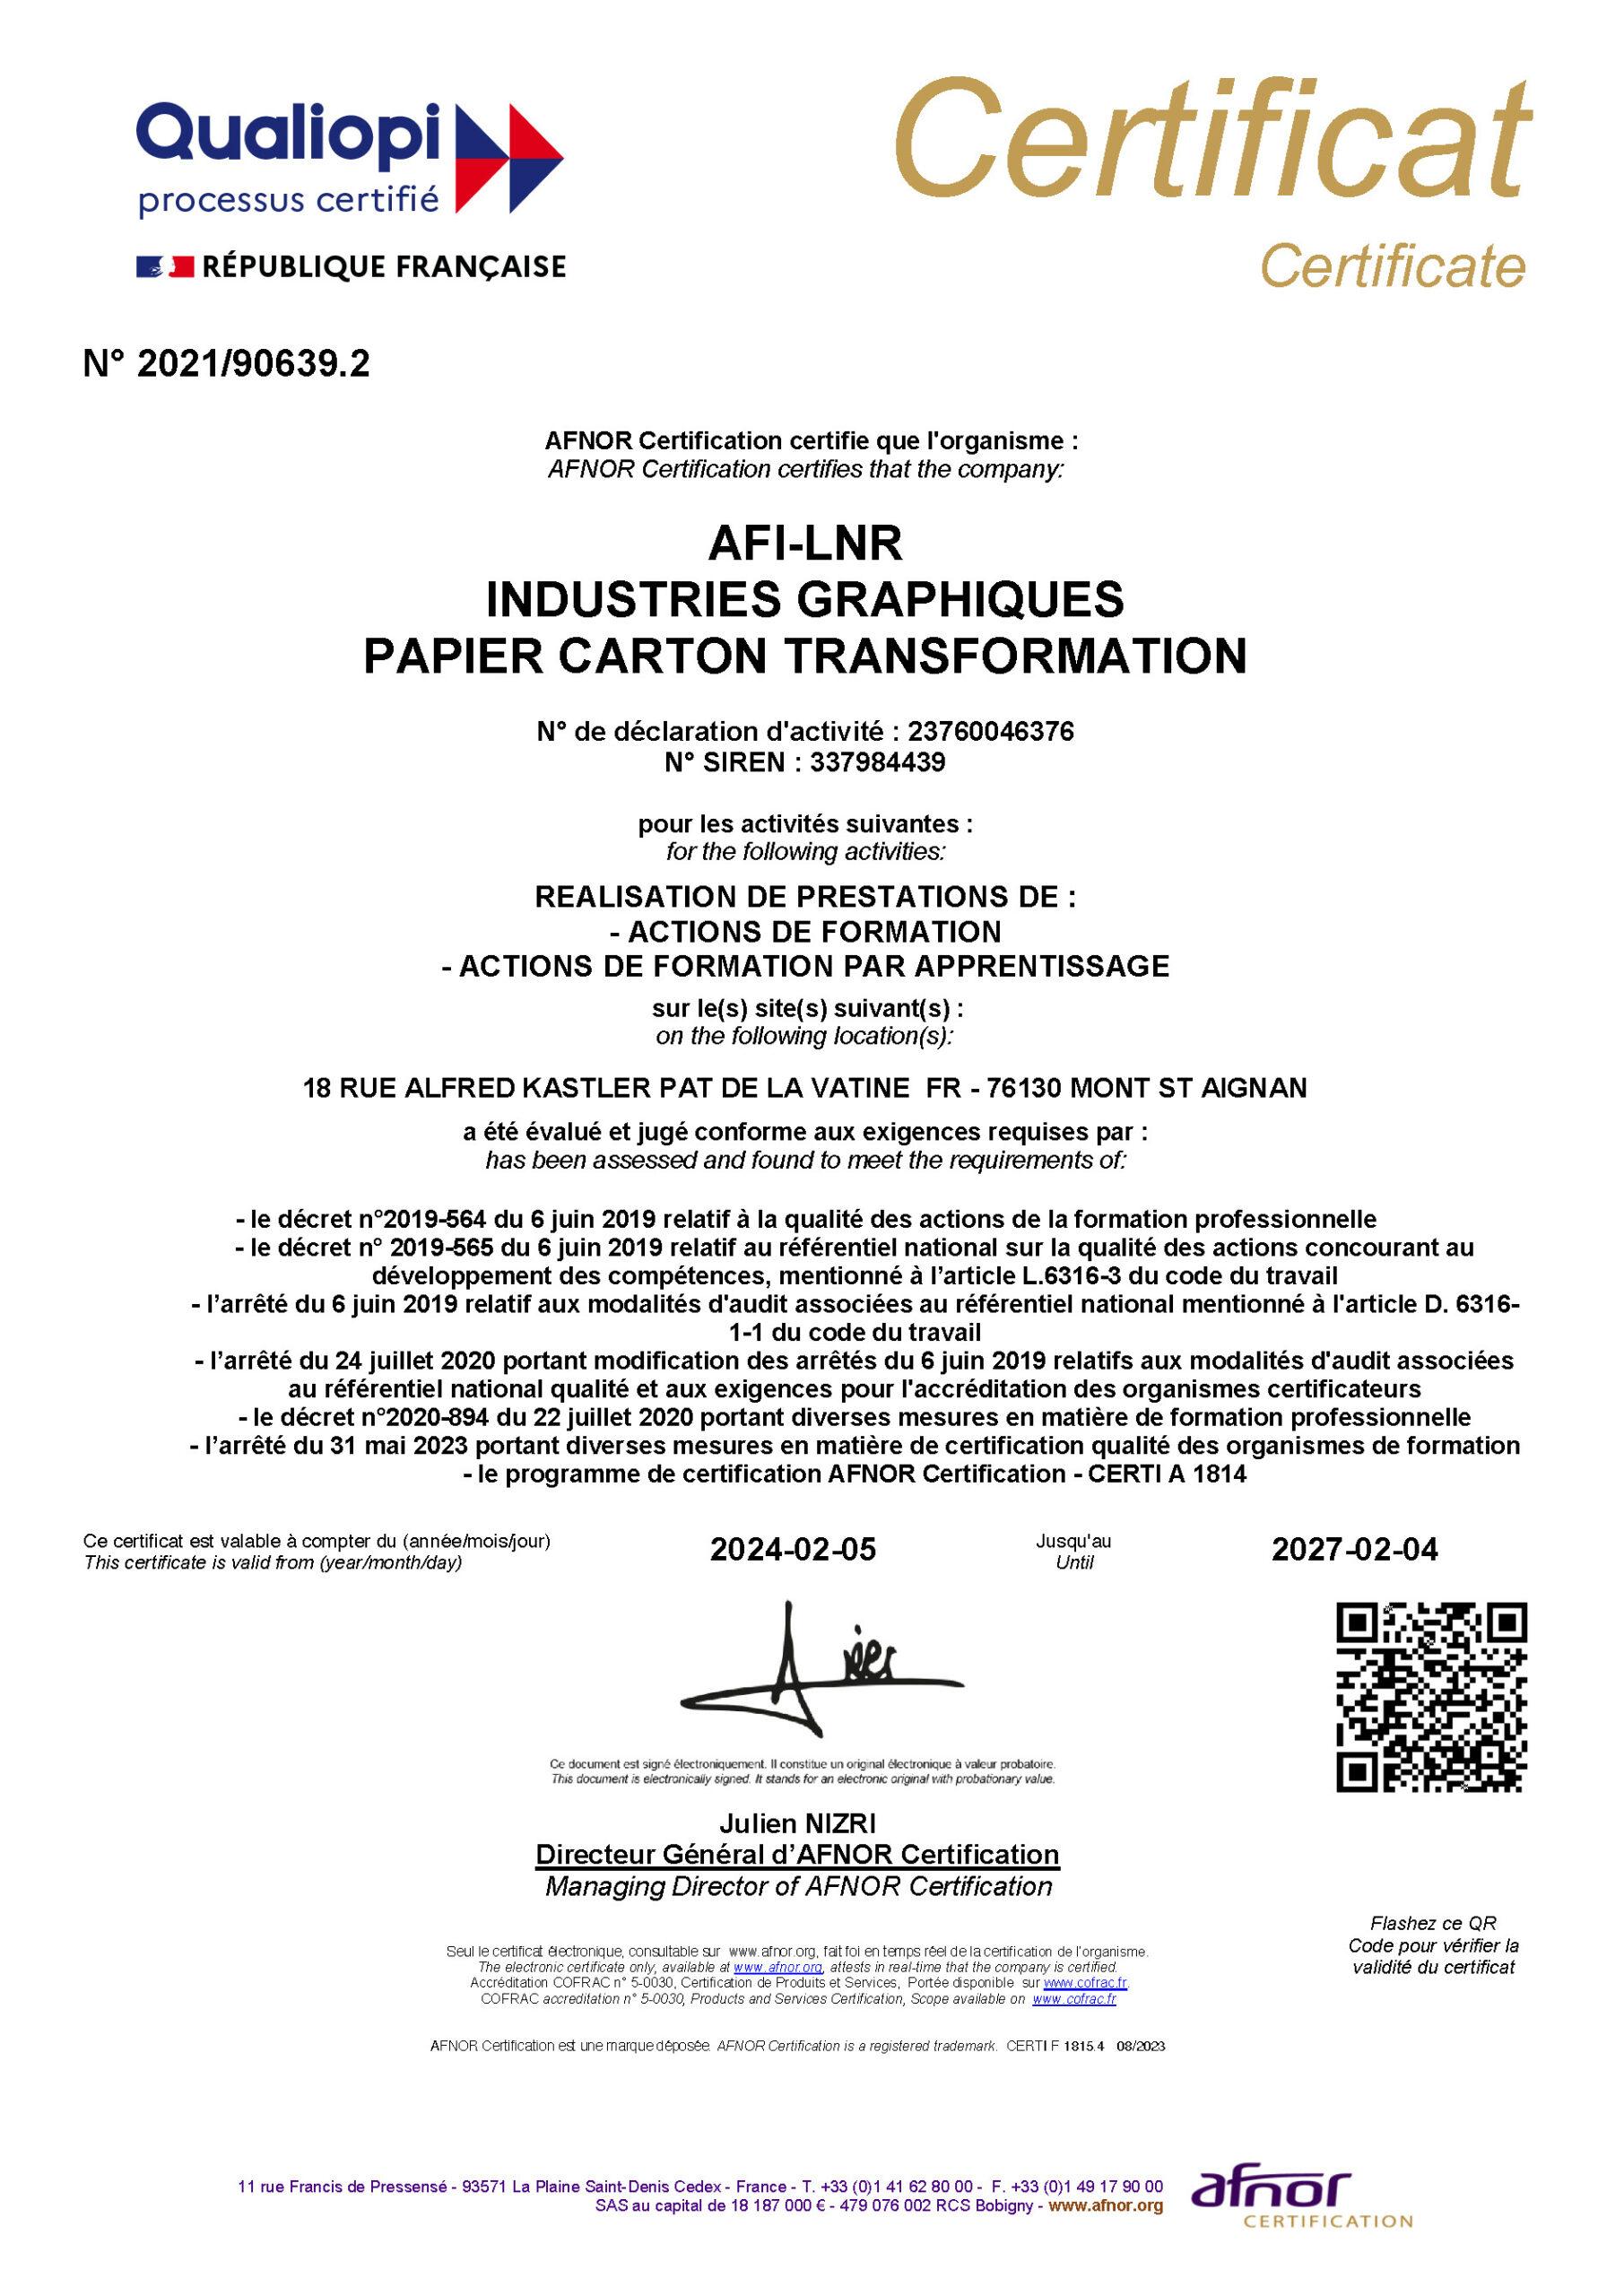 Certificat renouvellement Qualiopi 2024